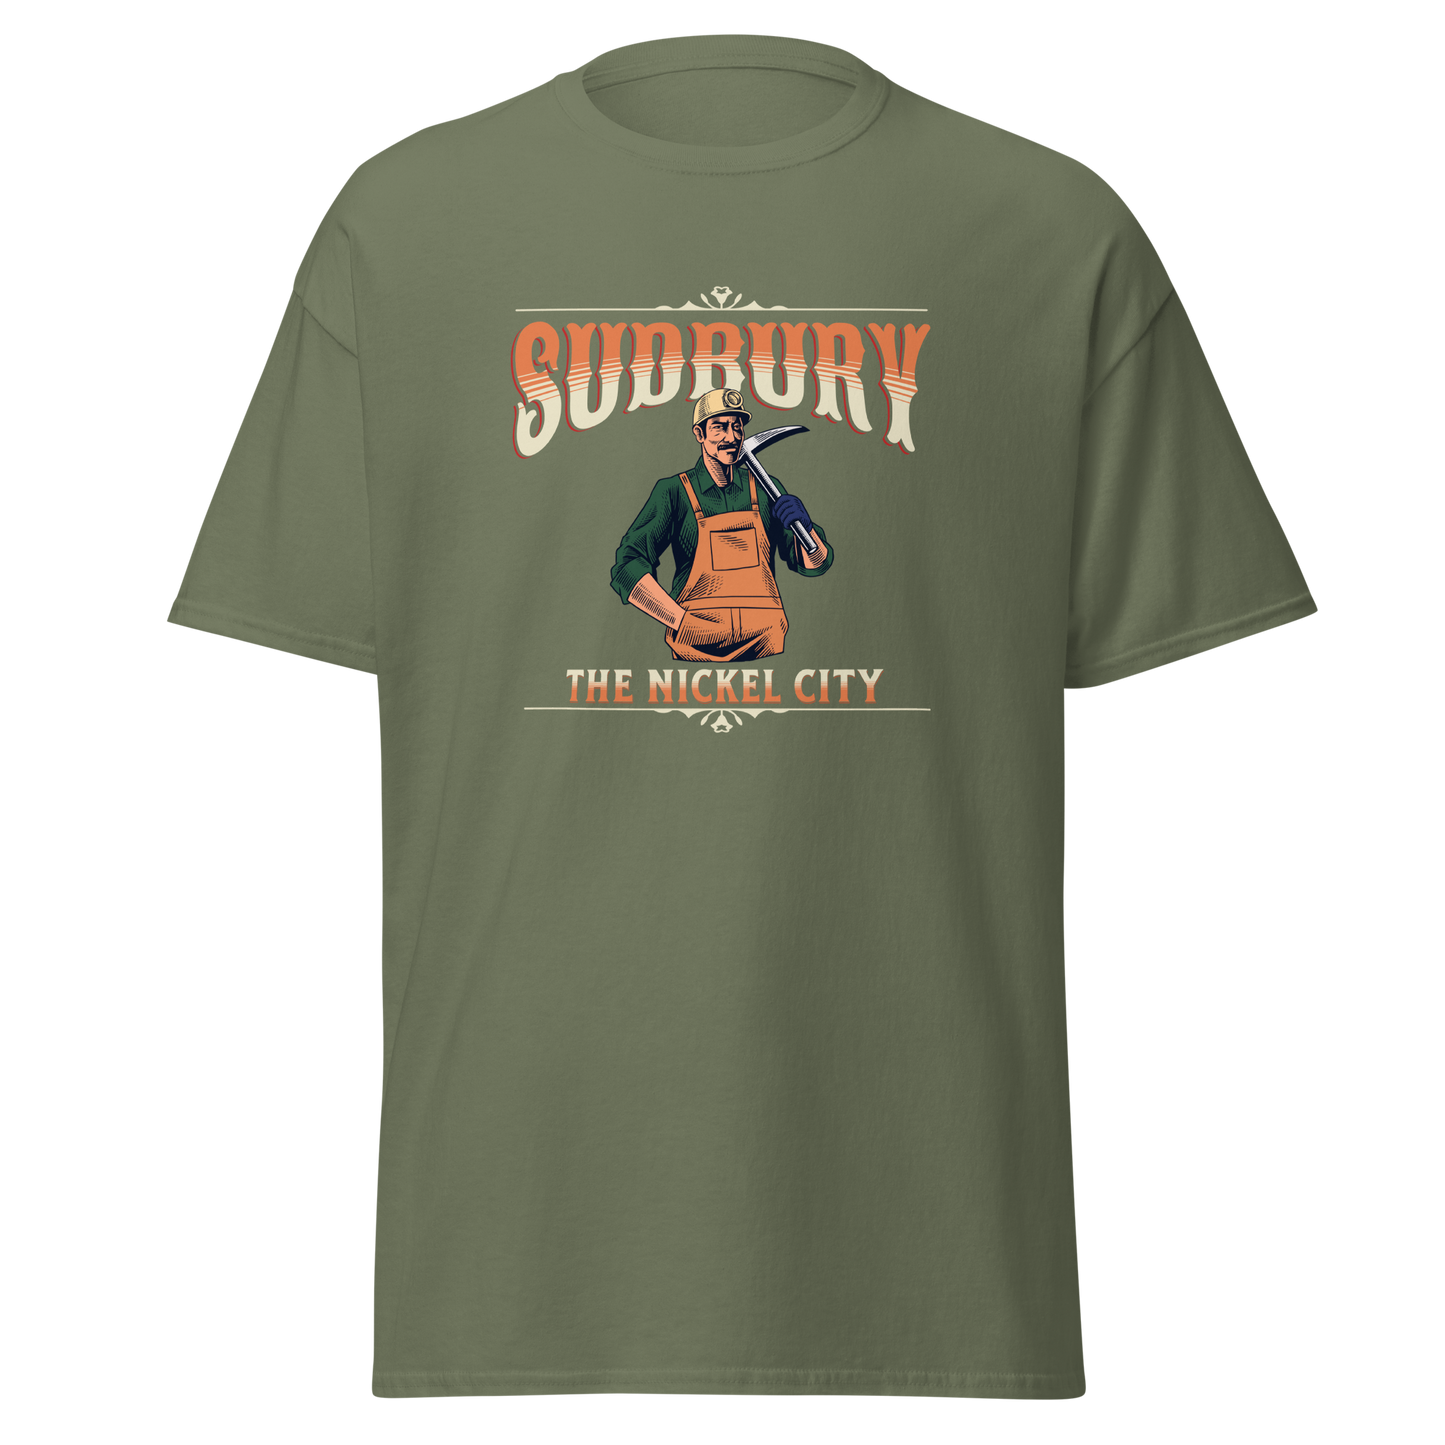 Canadian City T-Shirt, Sudbury, Ontario, Miner Design, The Nickel City, Men's T-Shirt